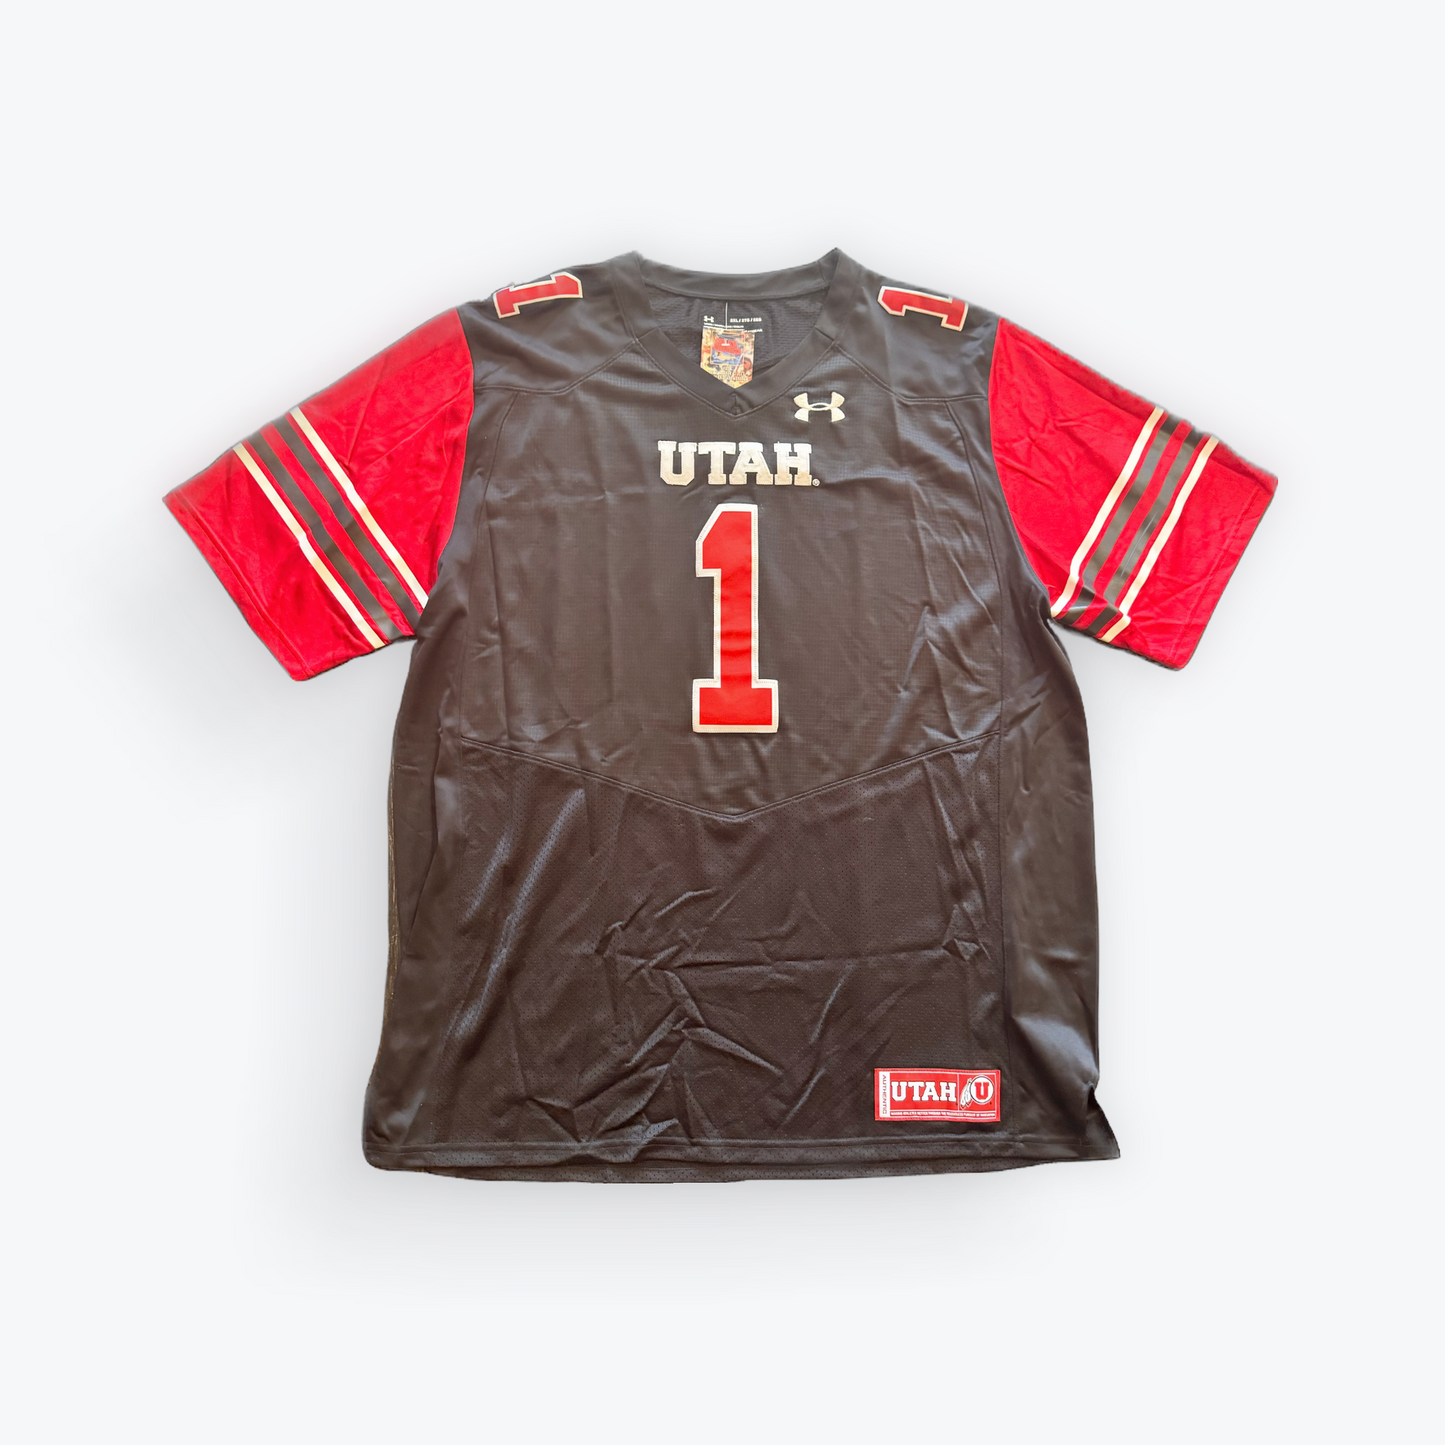 Vintage Under Armour Utah University #1 Jersey